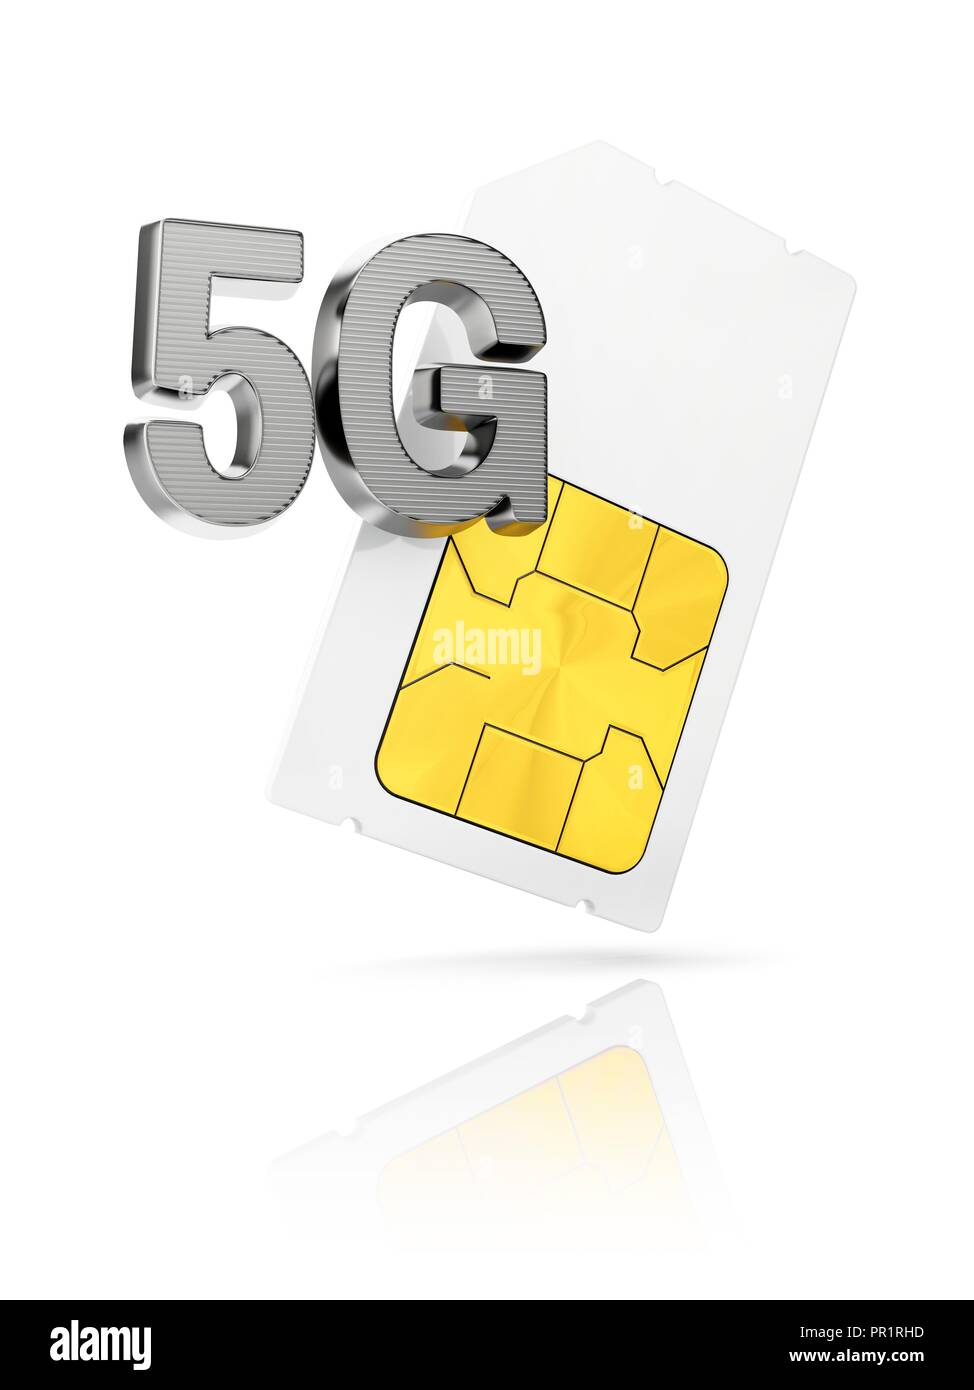 5G sim-card, illustration. Stock Photo